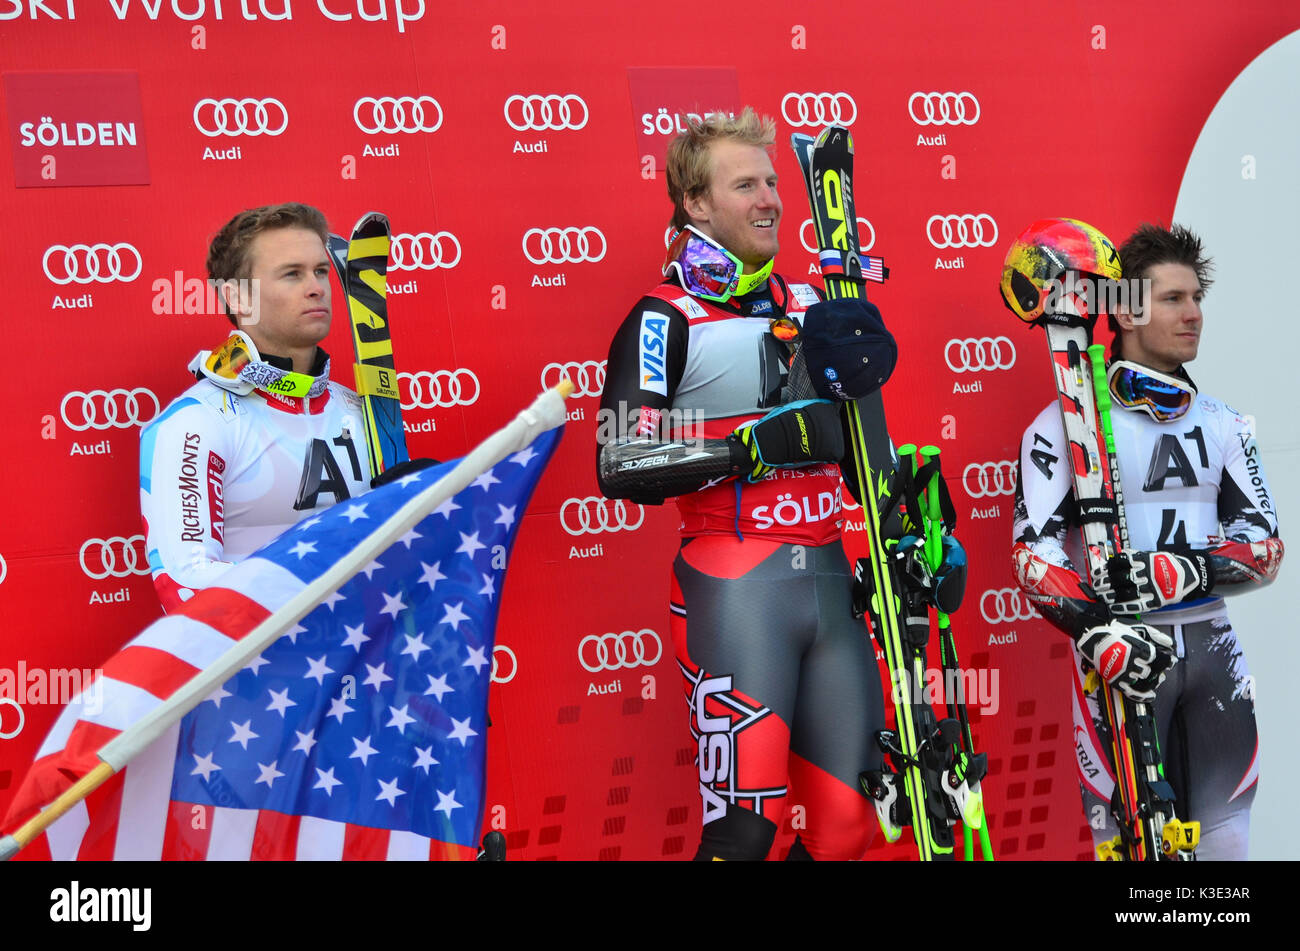 Skiing, ski race, ski world cup, ski racer, winner's photo, winner's stage, Ligety, Pinturault, Hirscher, Stock Photo